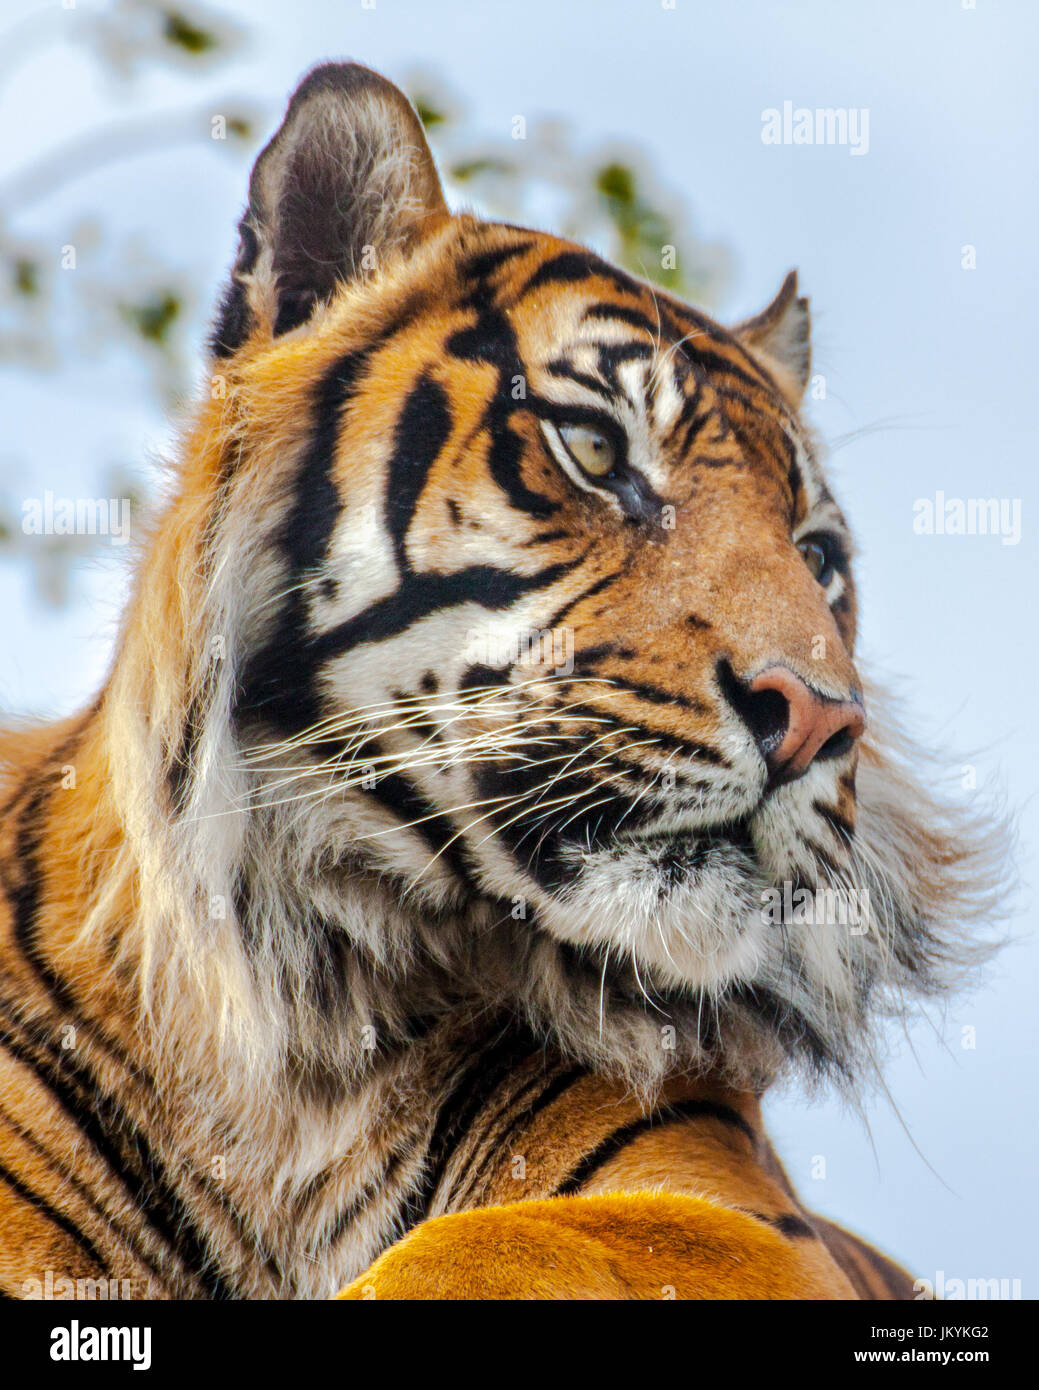 Front sitting down view of a Royal Bengal Tiger (panthera tigris) Stock Photo